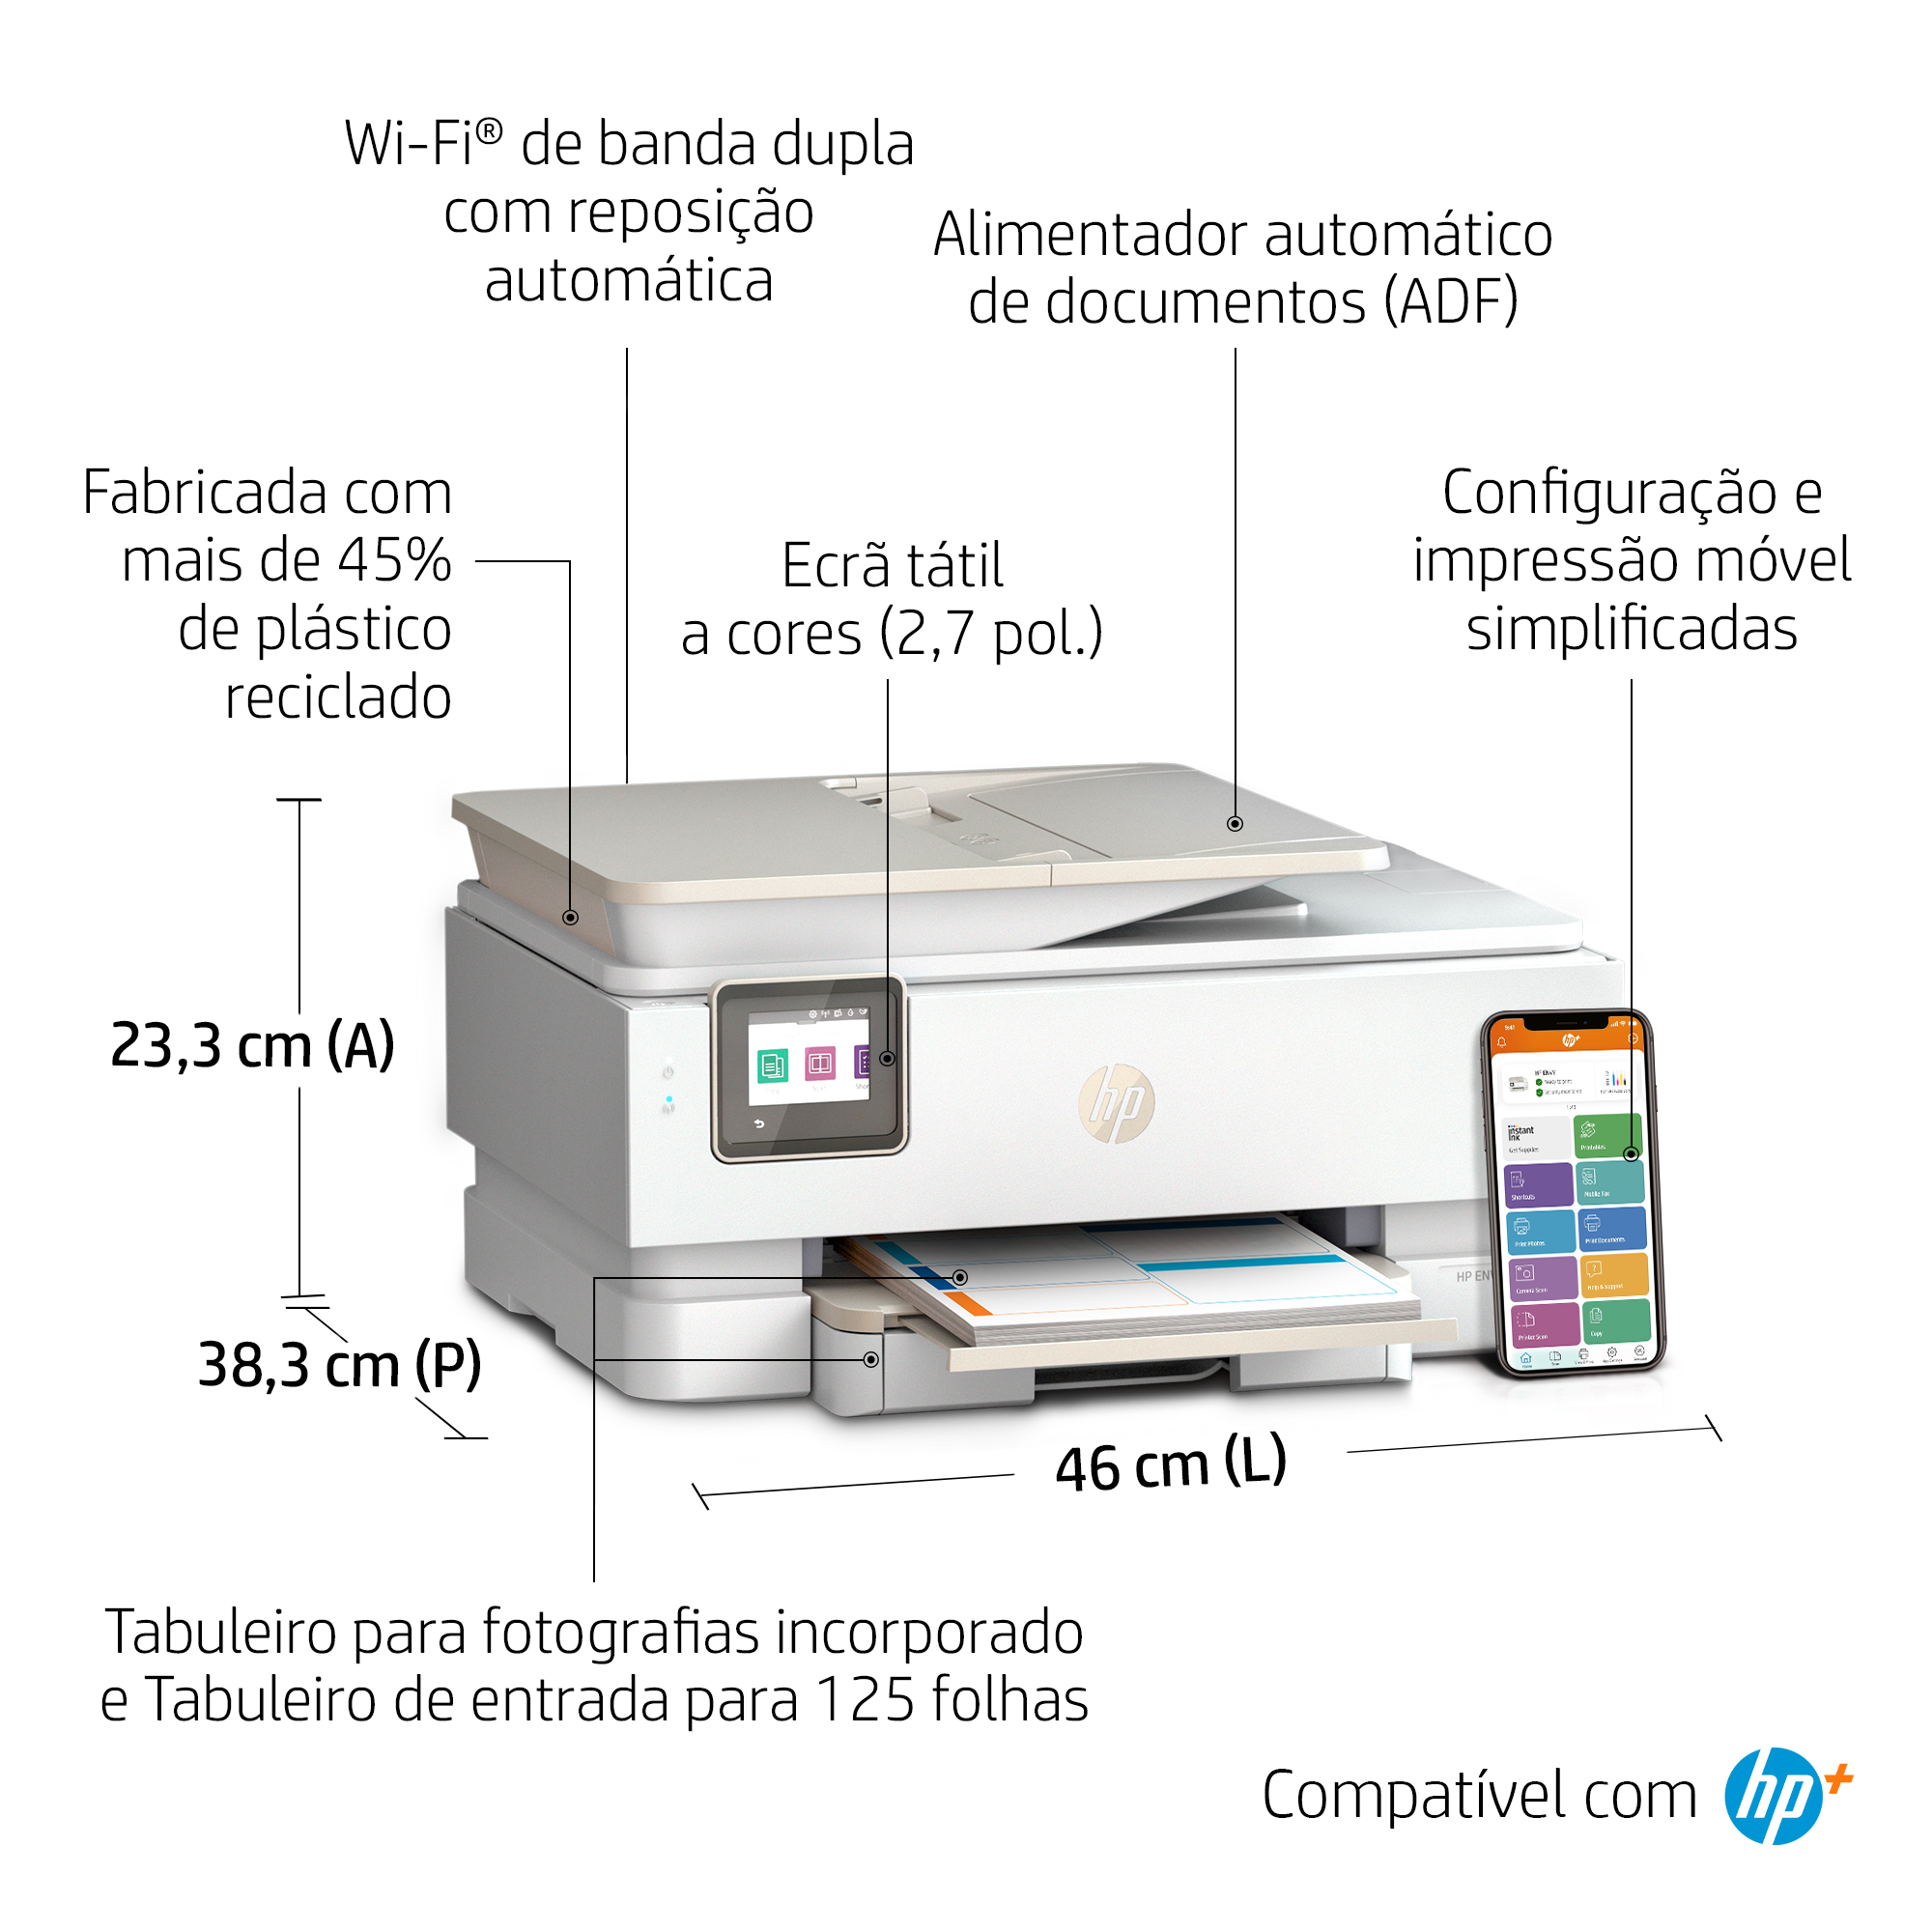 HP - Impresora de Inyección de Tinta HP Envy Inspire 7920e All-In-ONE WiFi